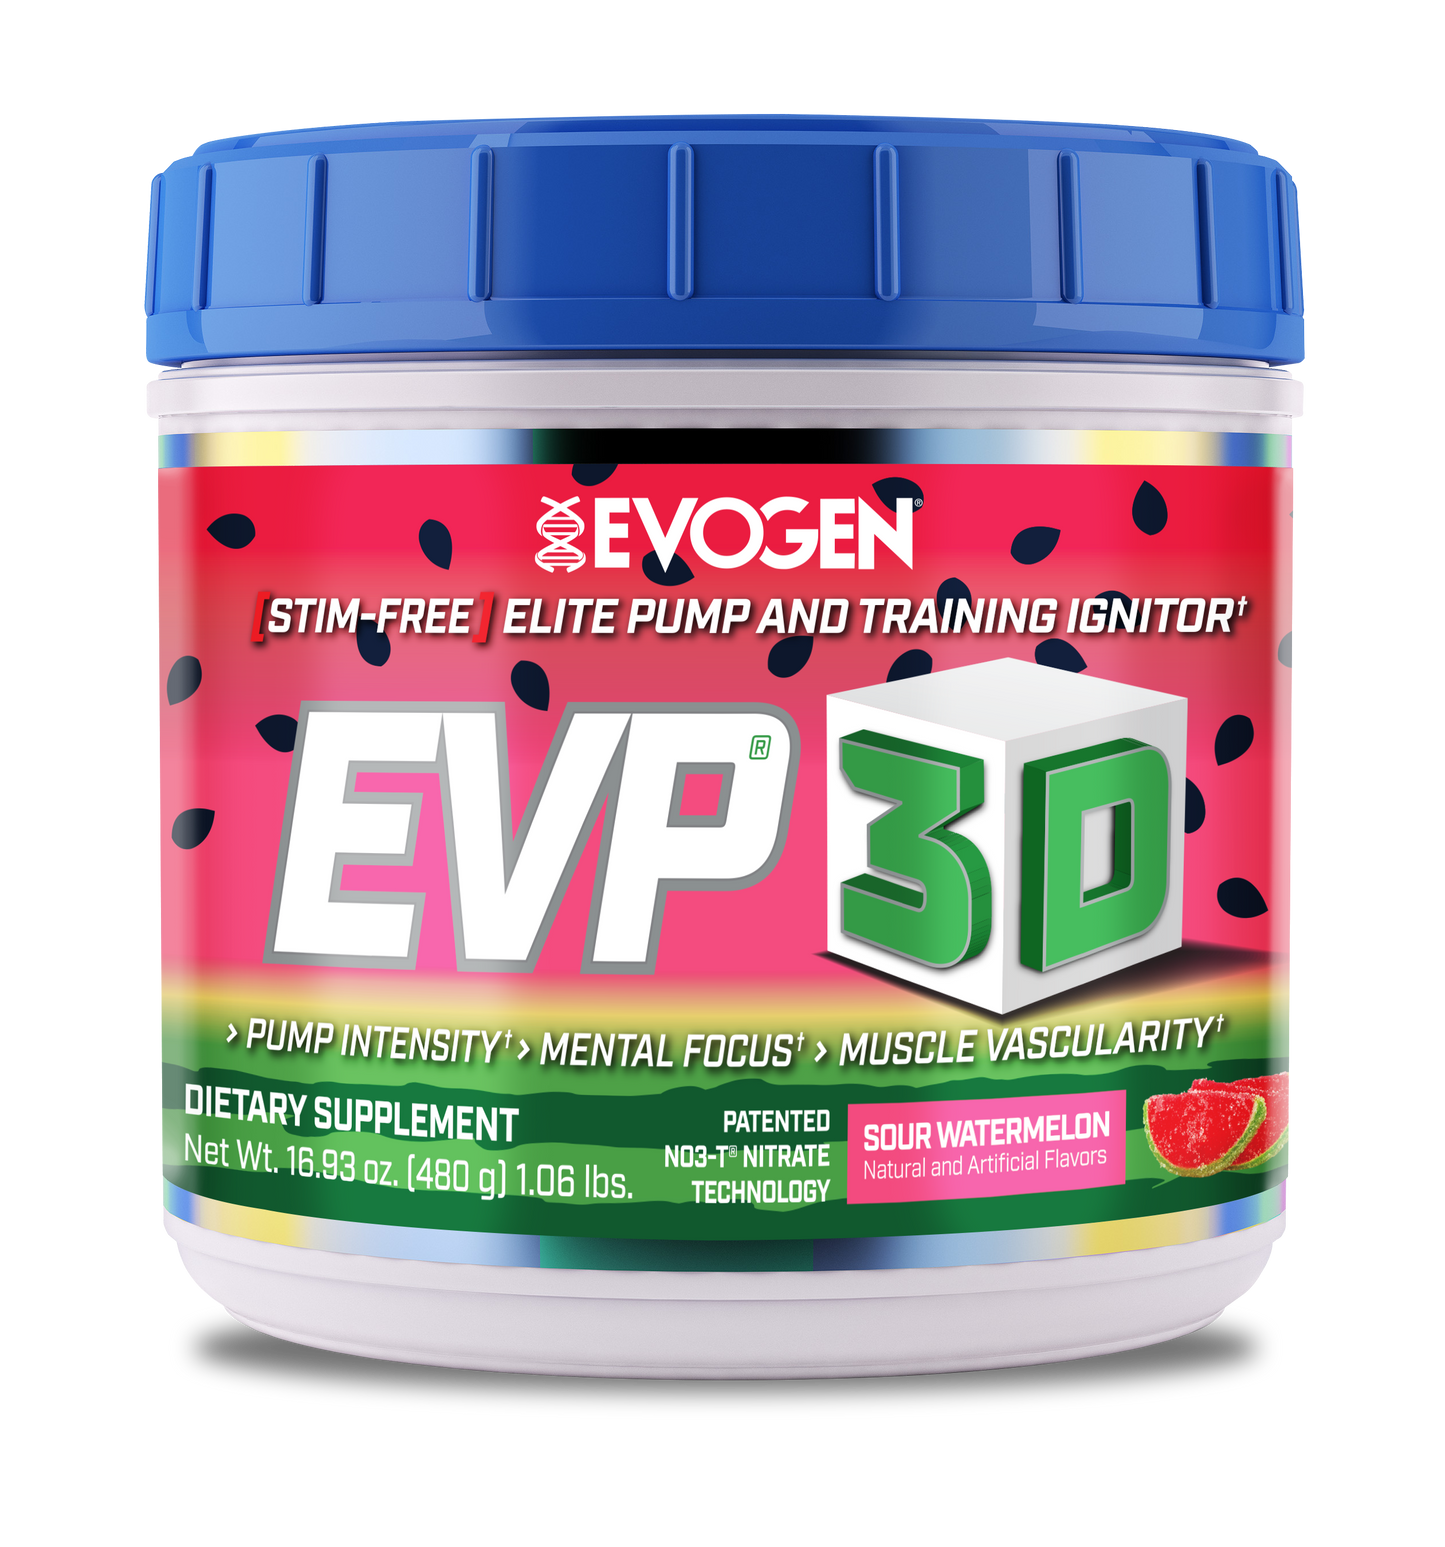 EVP-3D Non-Stim Pre-Workout